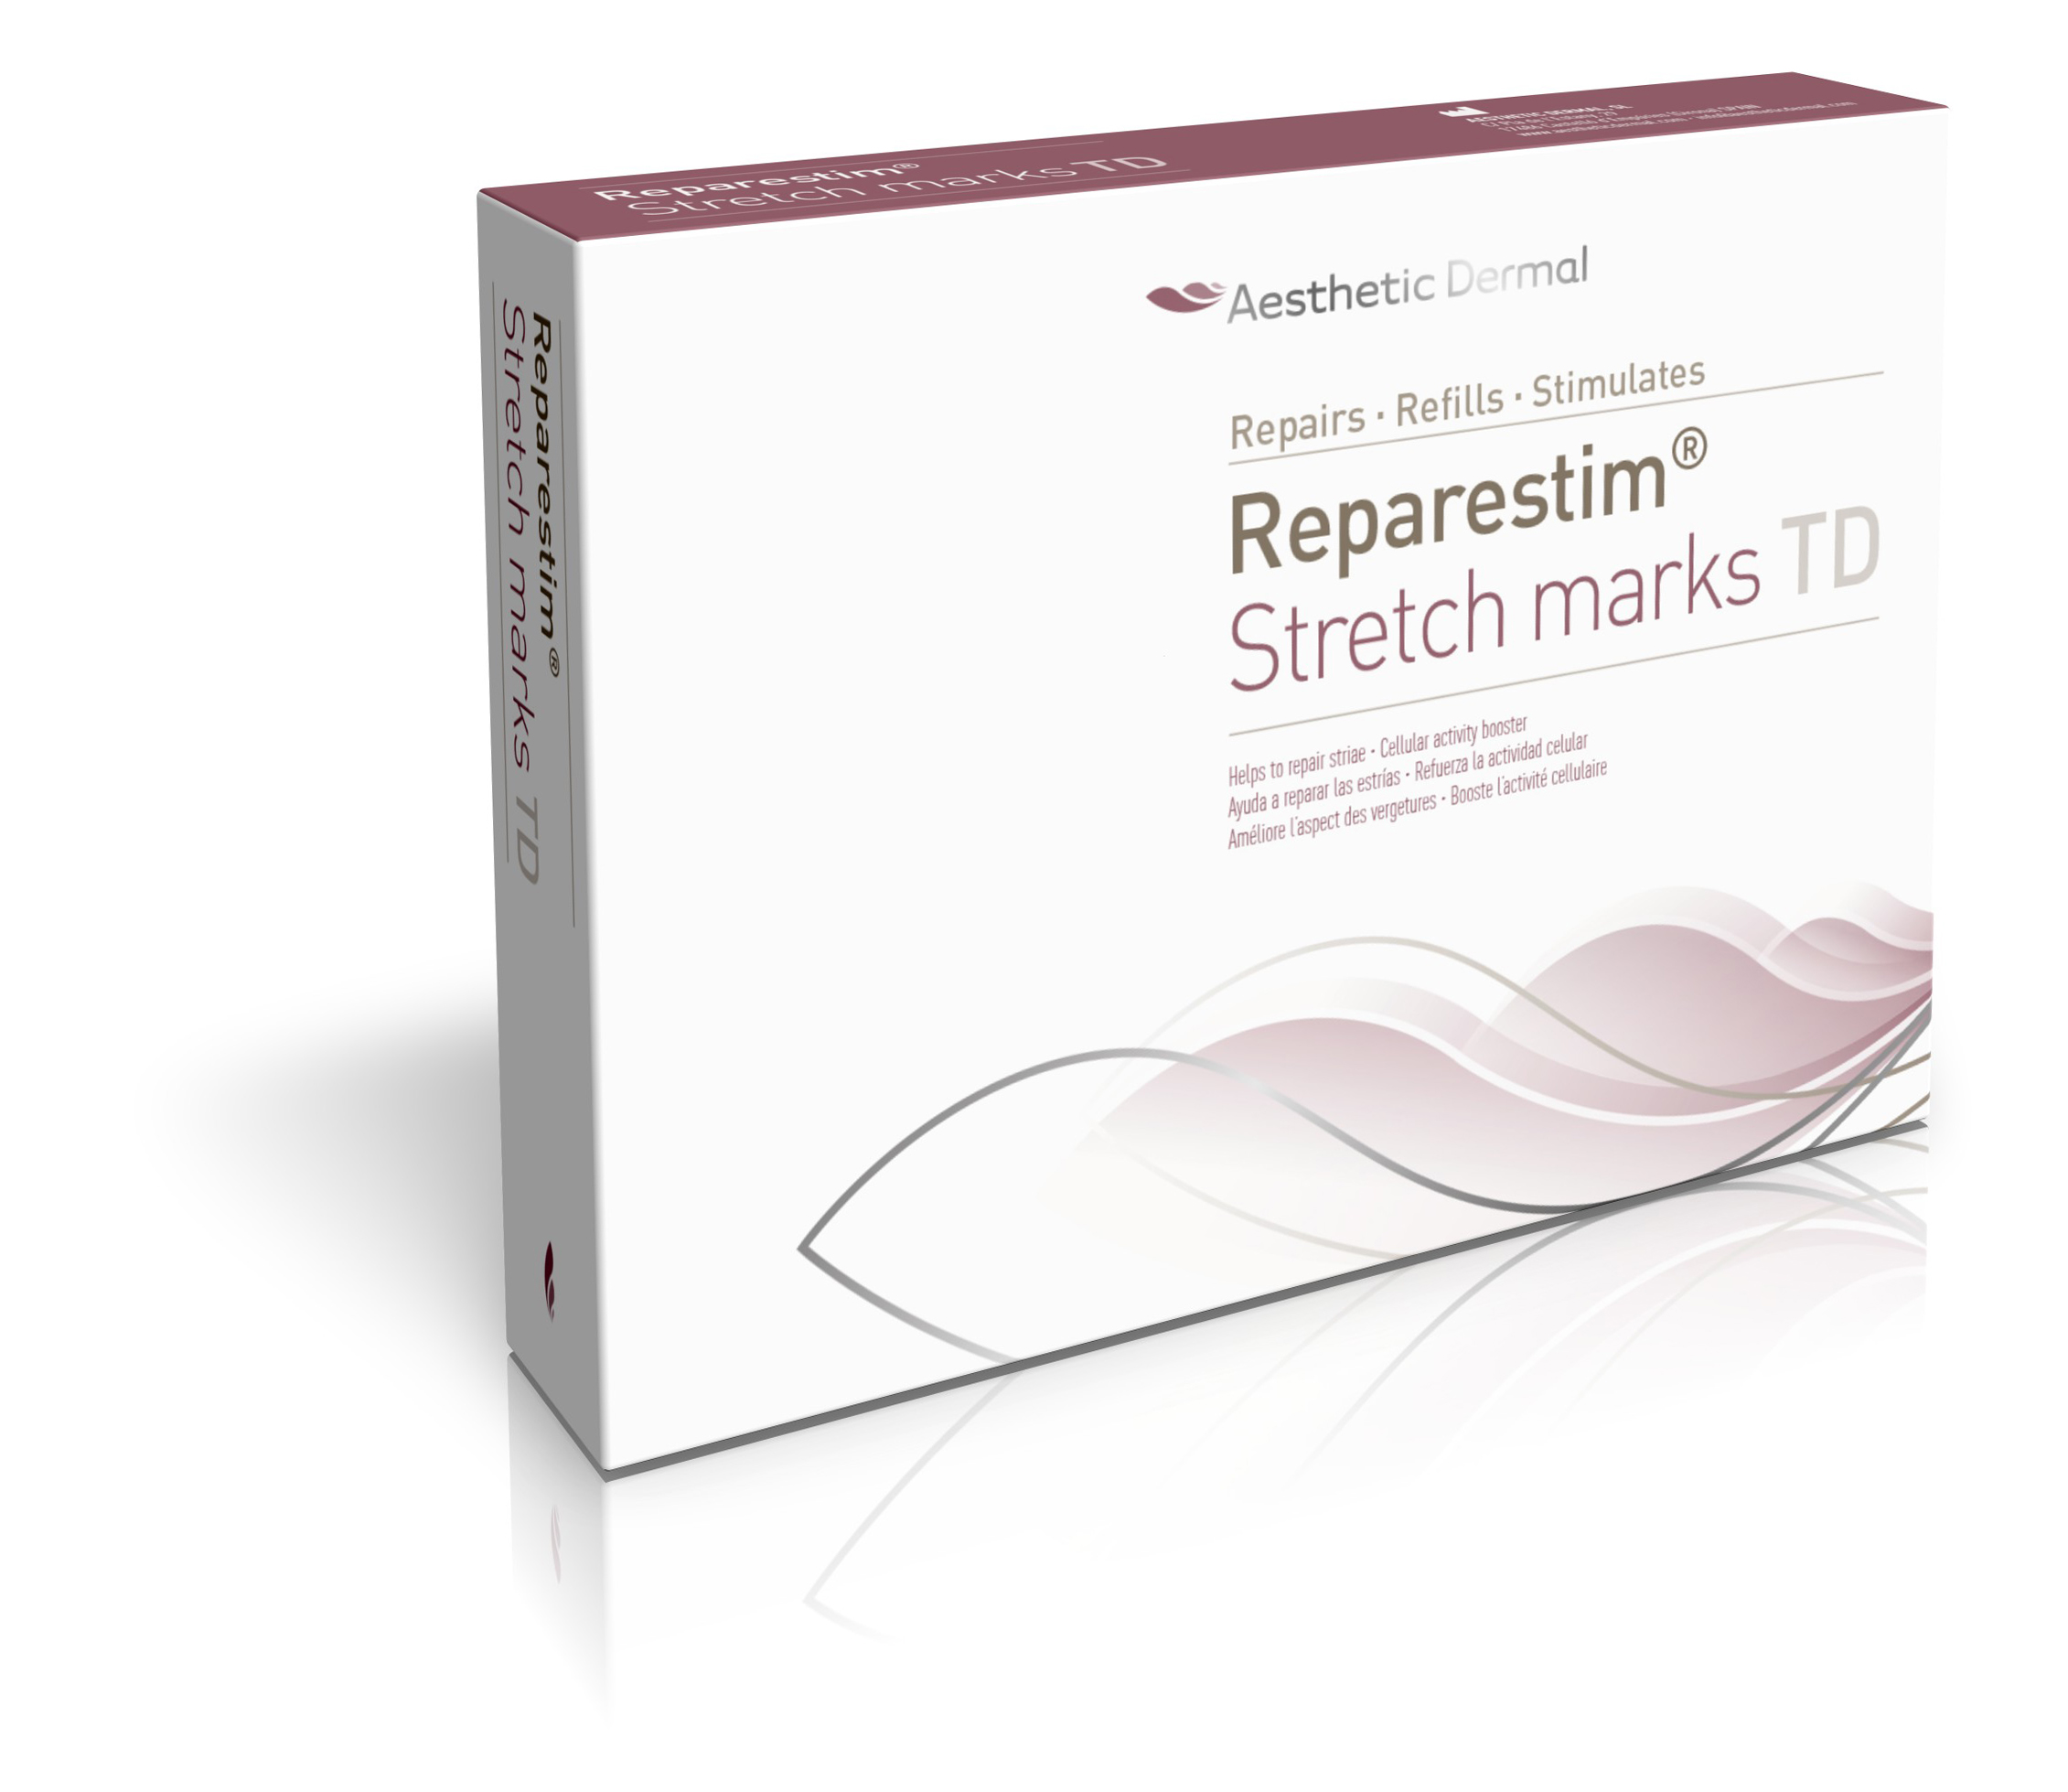 Aesthetic Dermal - ReparestimTD StretchMarks